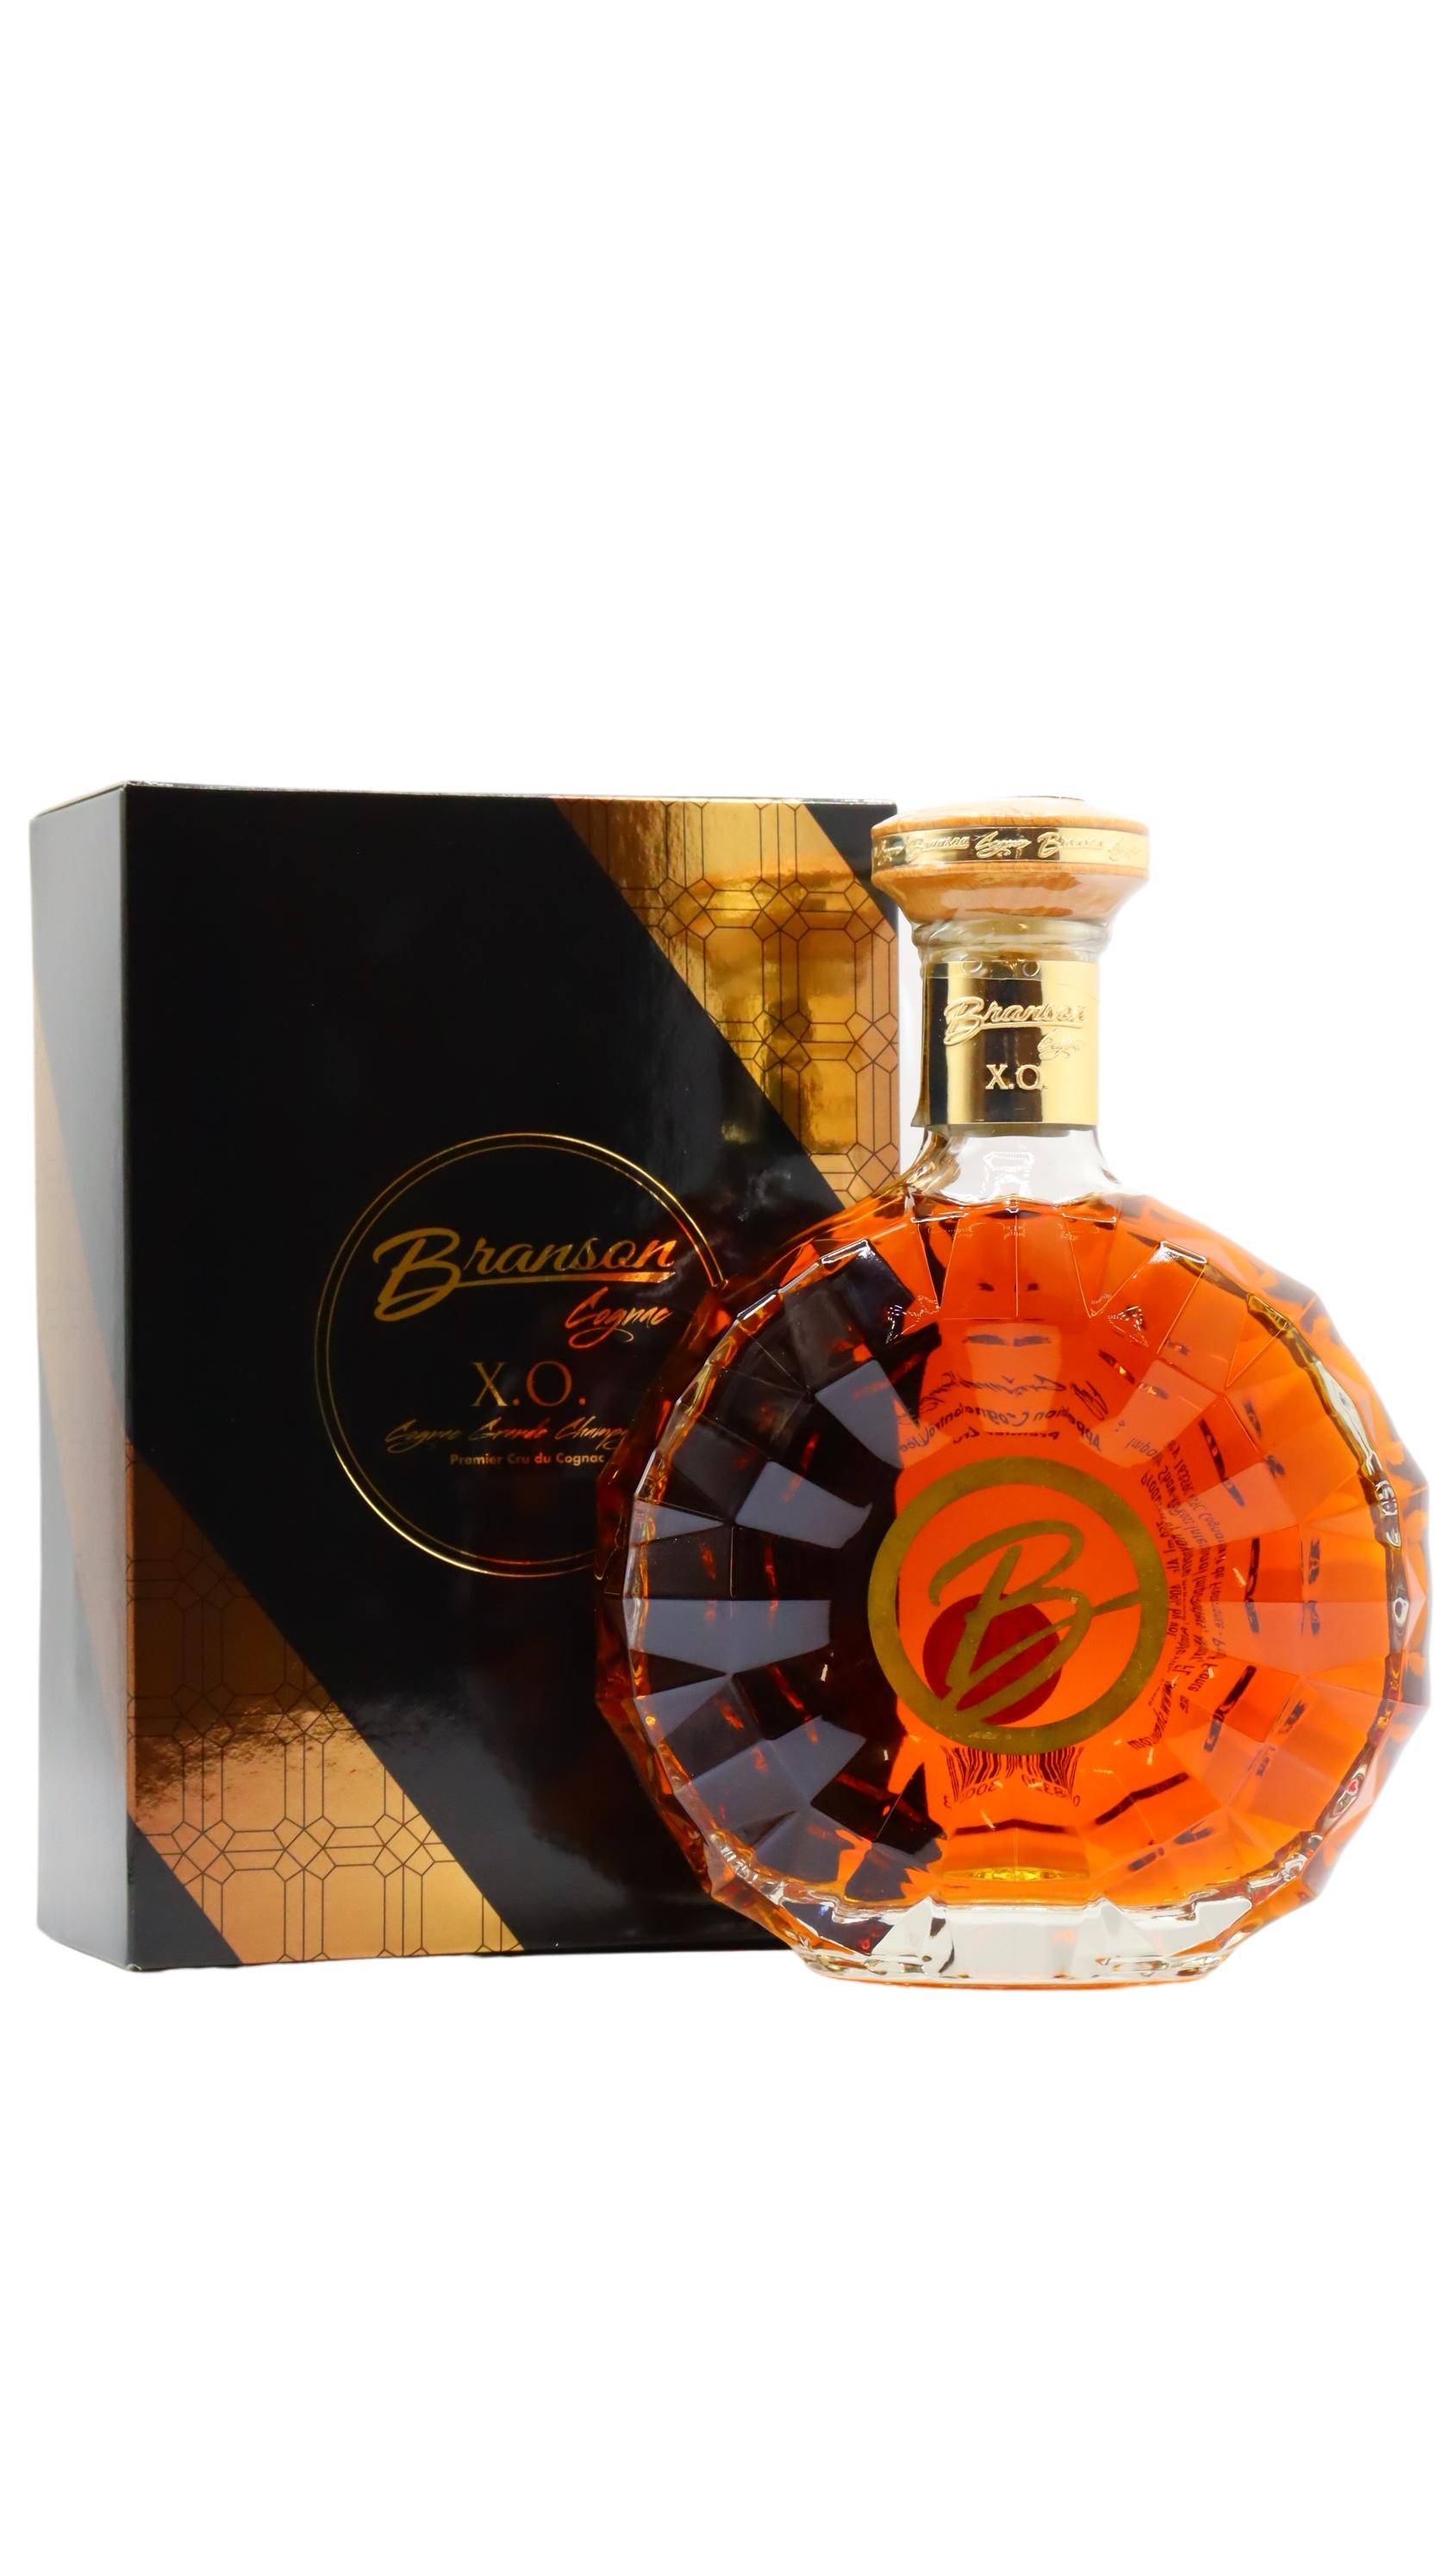 Branson - XO 50 Cent Cognac | Tequila Liquor Store